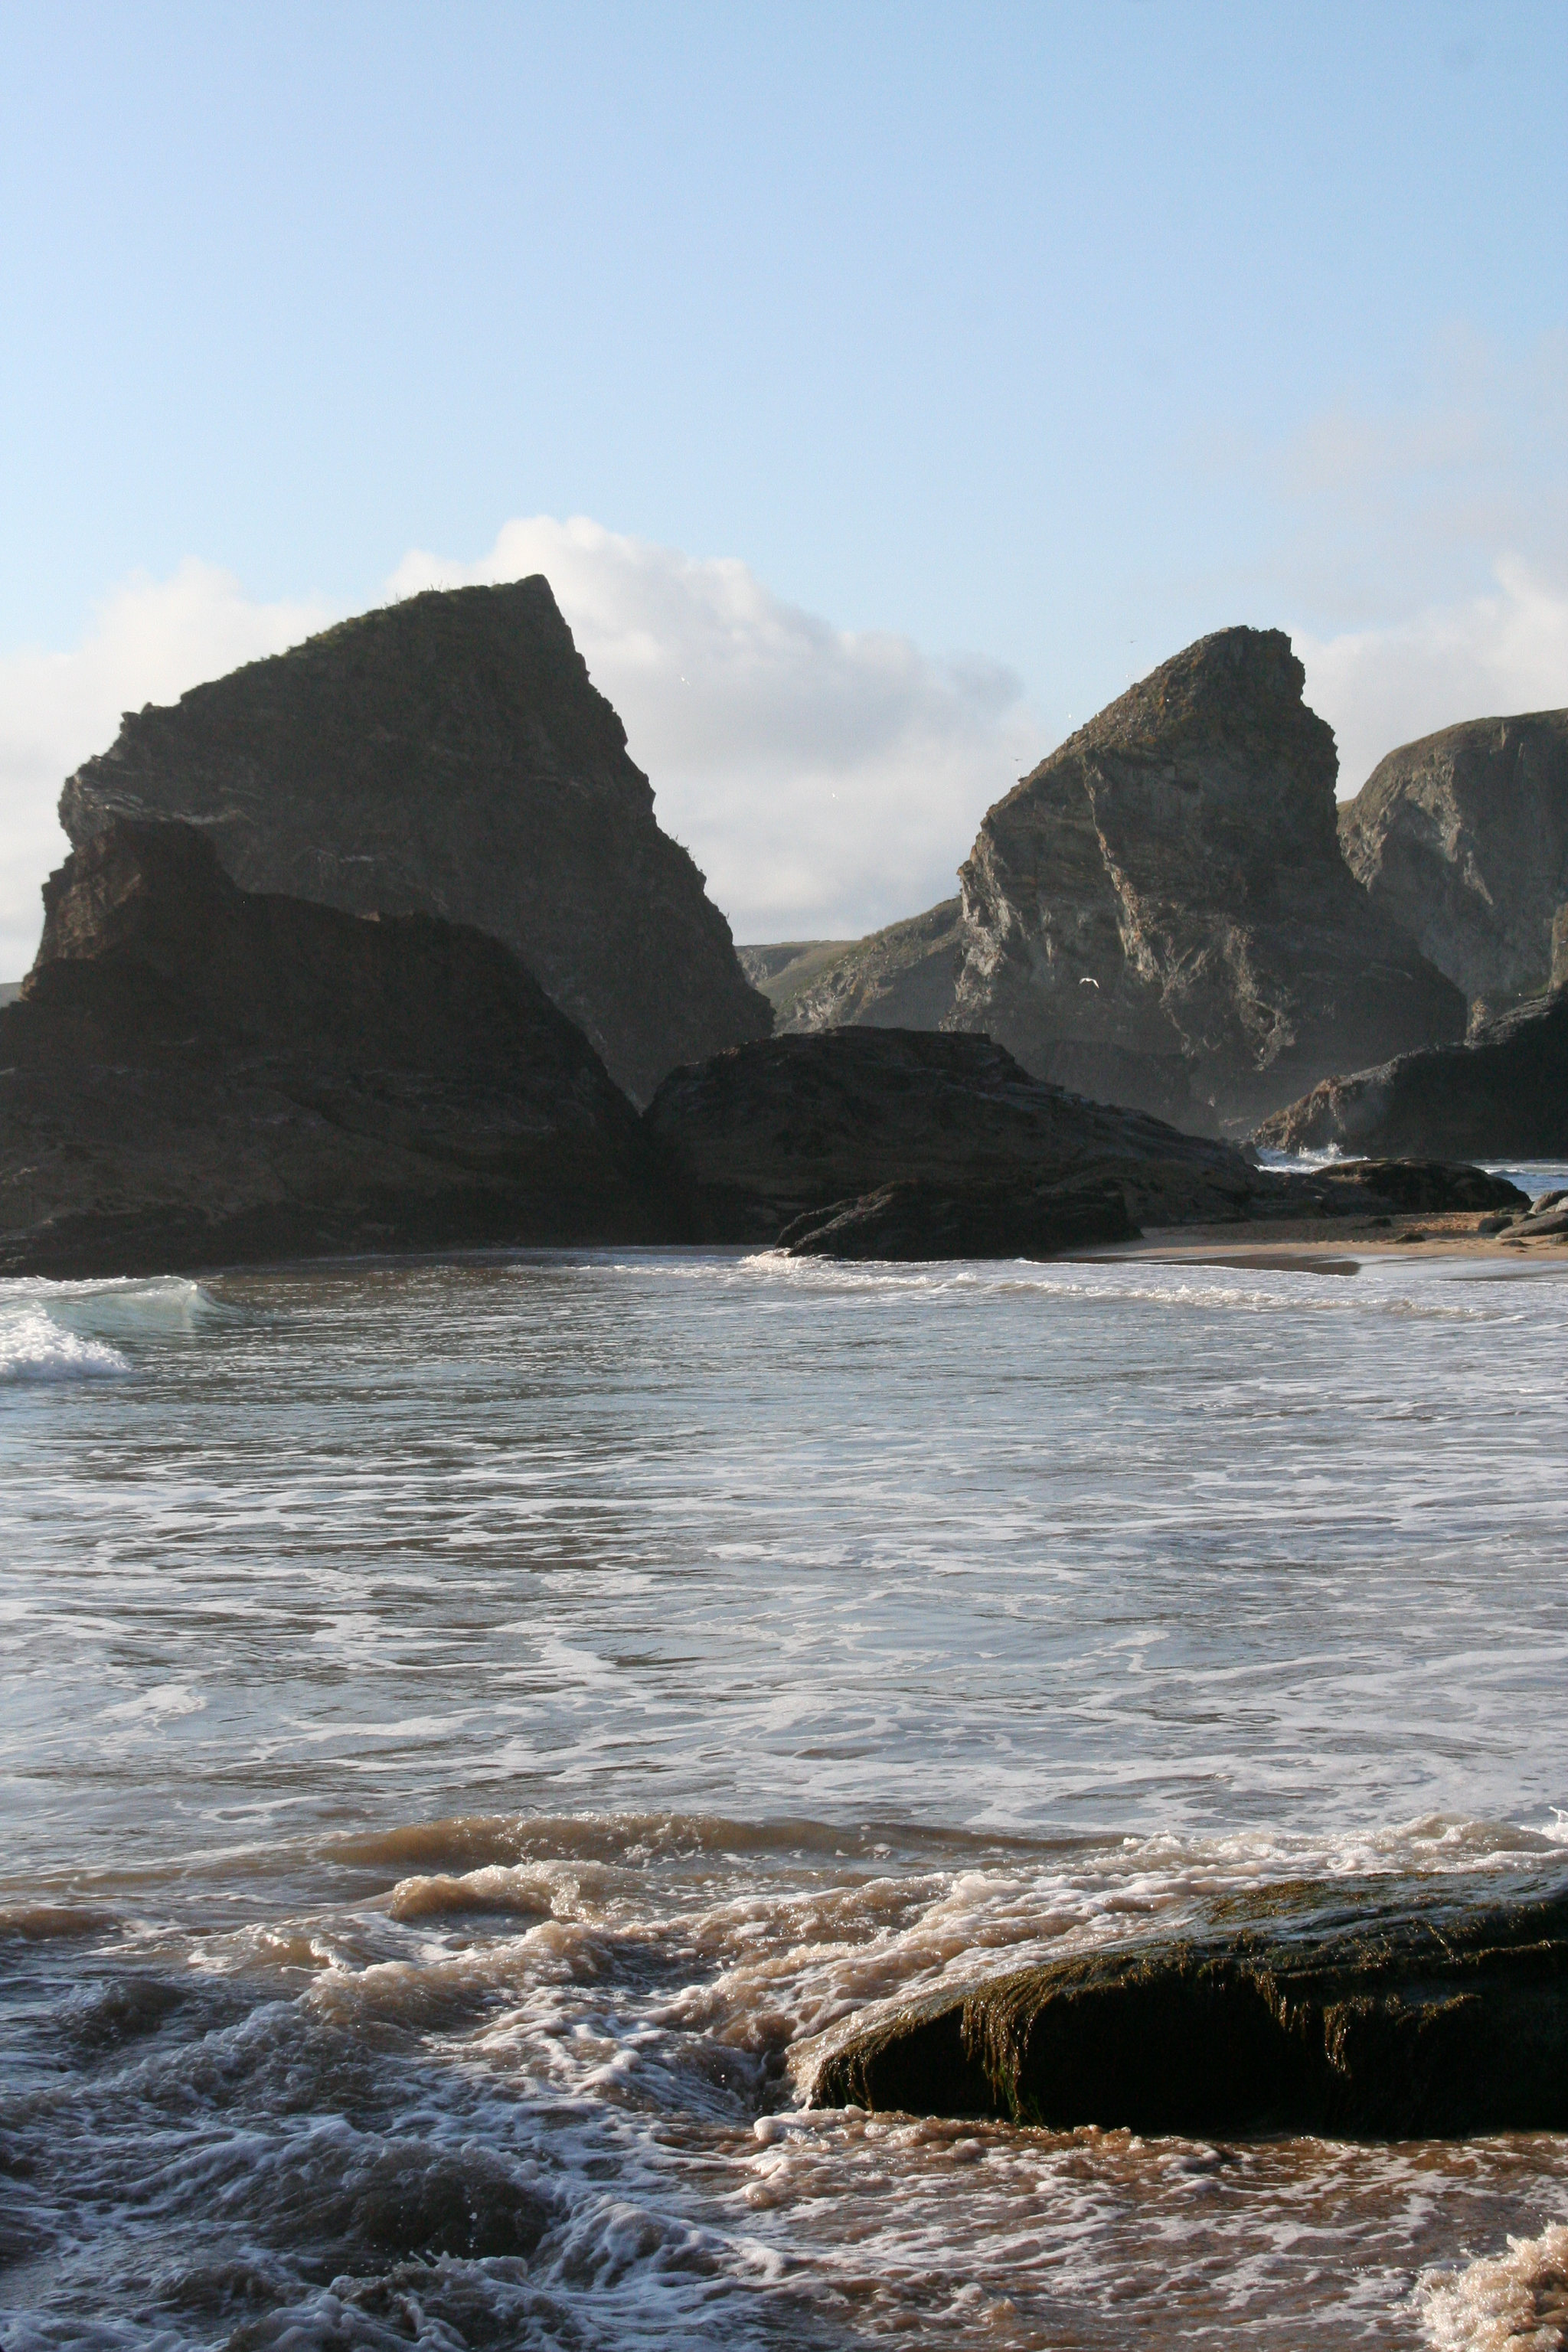 Камни скалы вода. Море волны скалы камни. Скалы в воде. Вертикальные камни скалы. Located on the coast of the